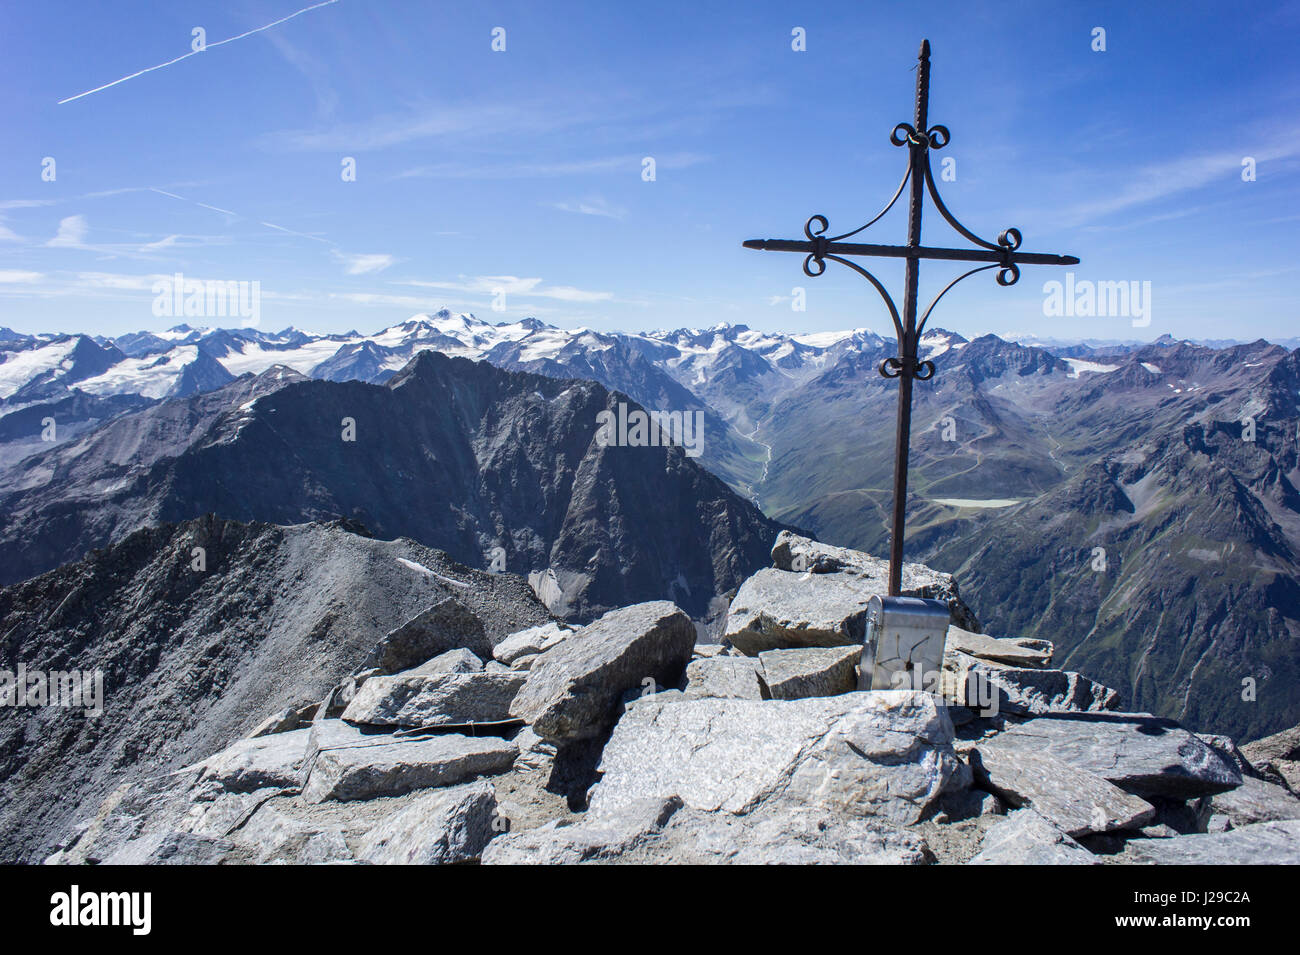 Hohe Geige (3395 m), Pitztal, Austria Stock Photo